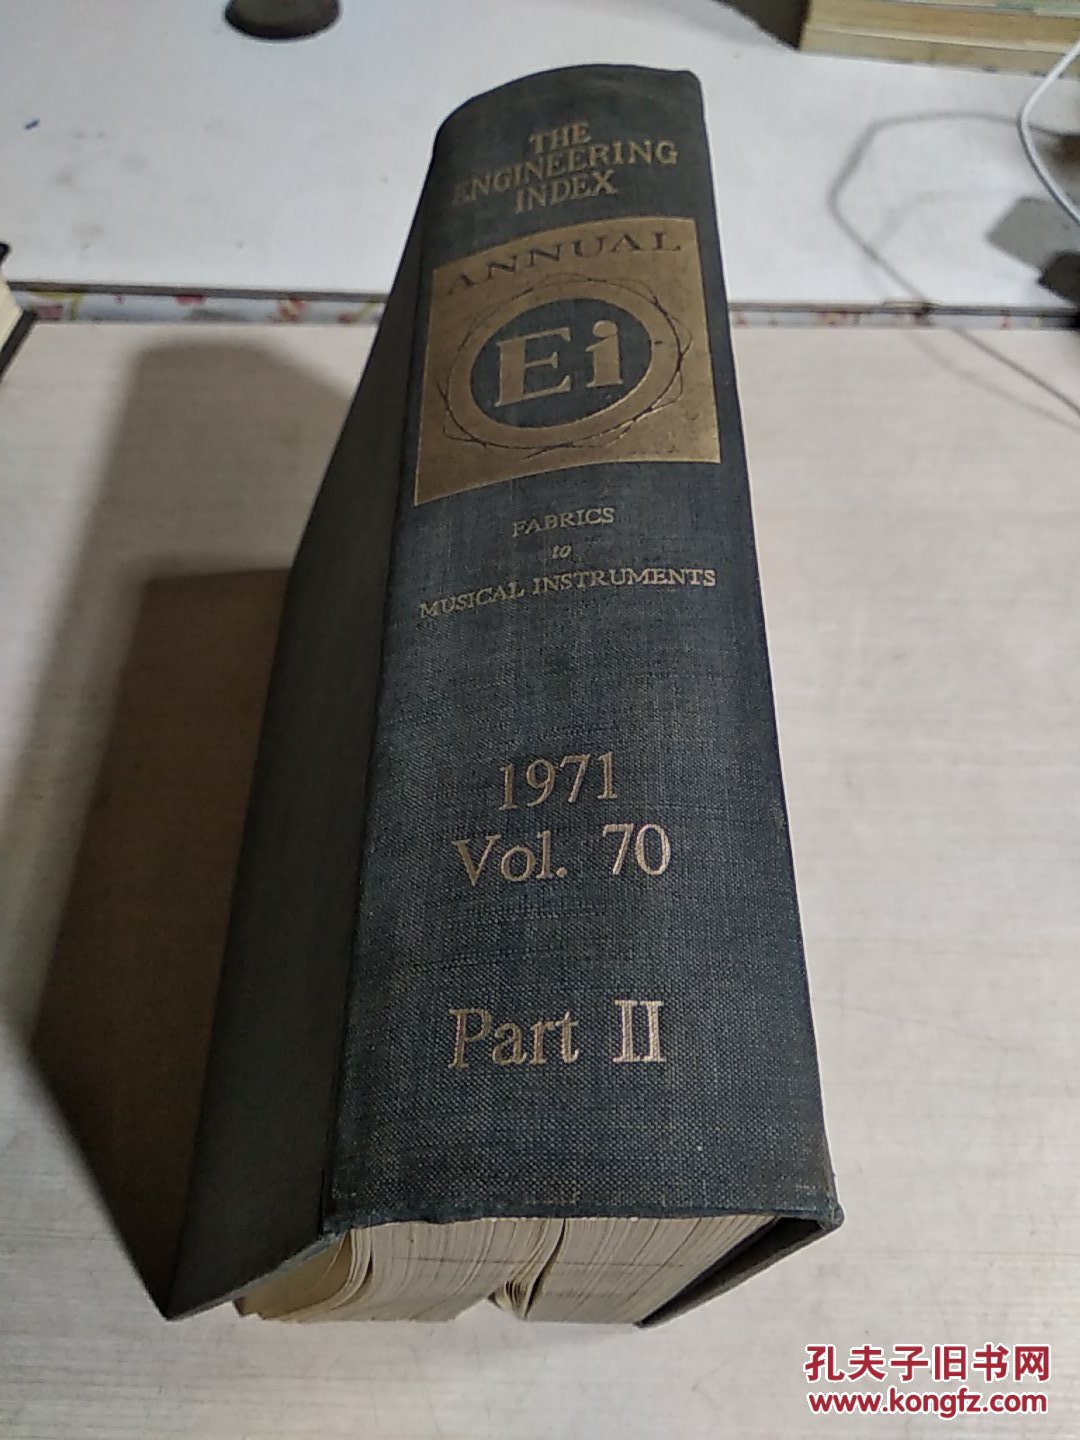 THE ENGINEERING INDEX ANNUAL EI FABRICS TO MUSICAL INSTRUMENTS.1971.Vol.70 Part II（工程指数年度EI织物到乐器）（英文）